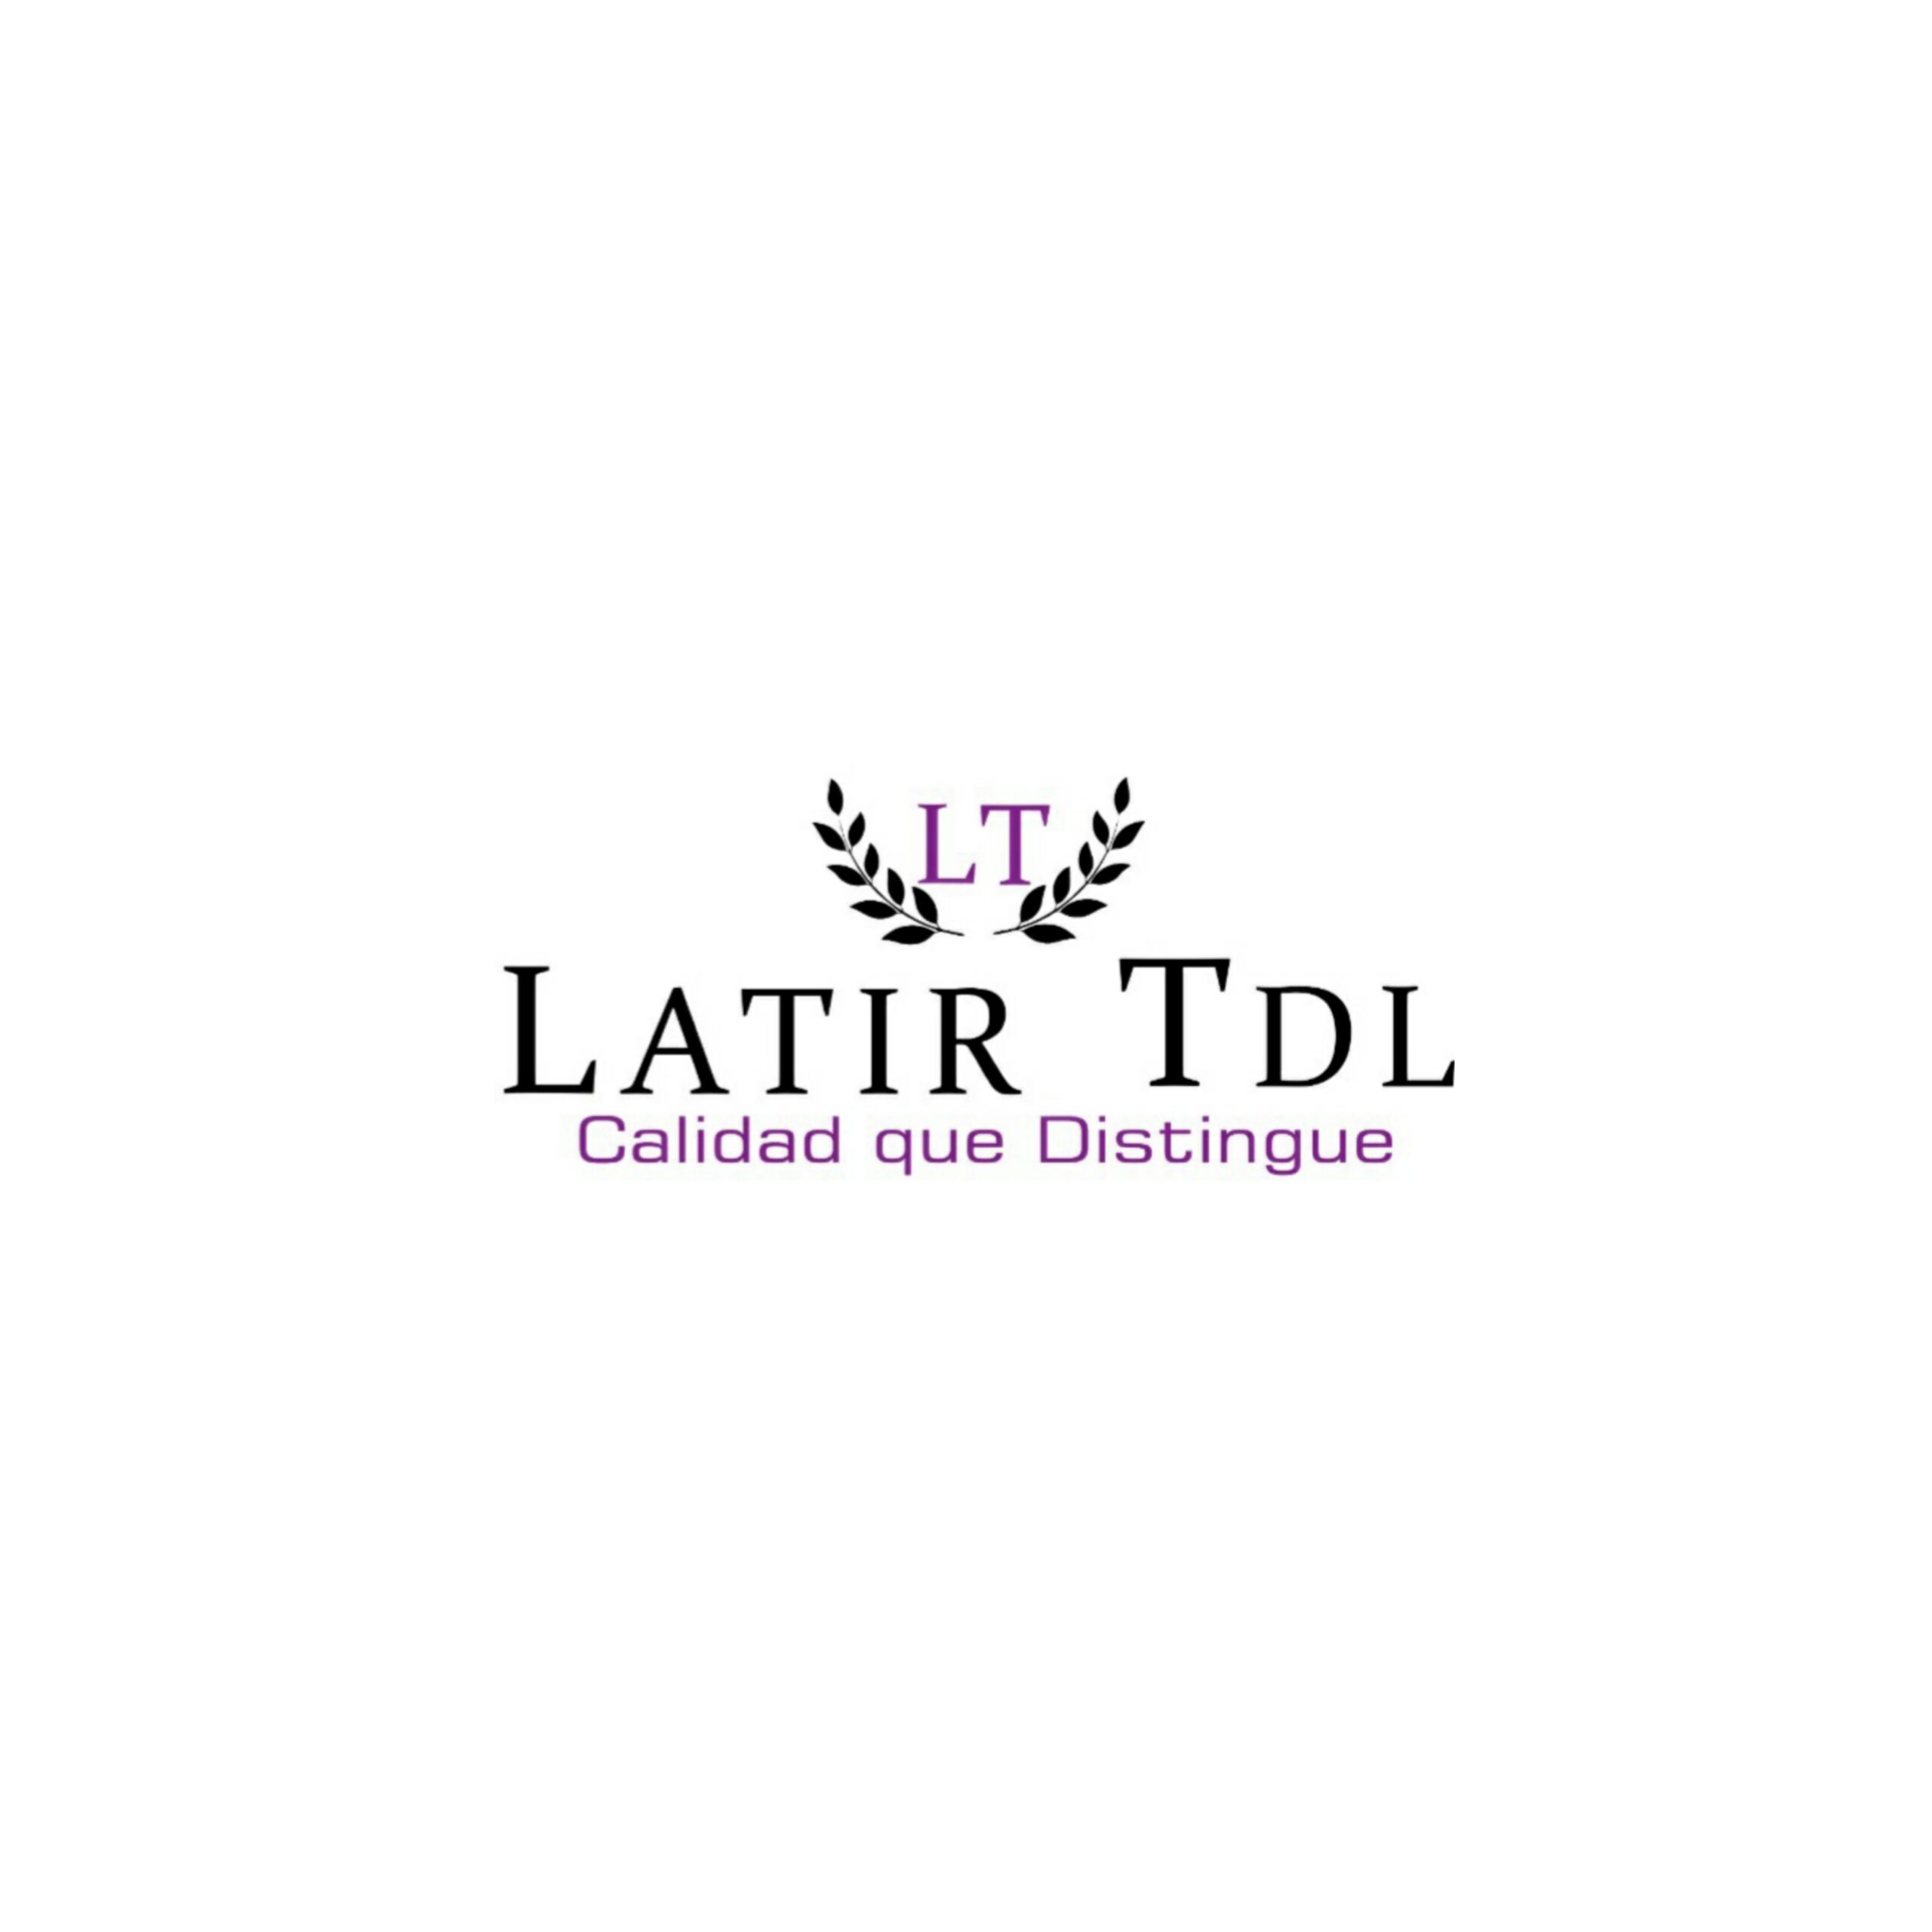 Latir TDL